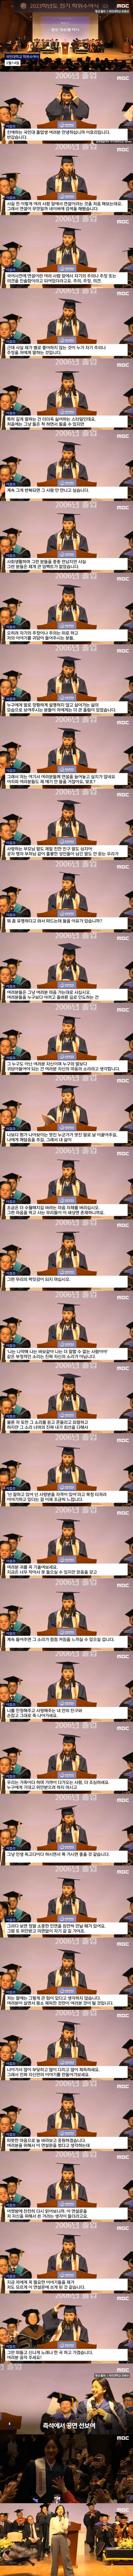 nokbeon.net-이효리가 청년들에게 전하는 졸업식 축사-1번 이미지